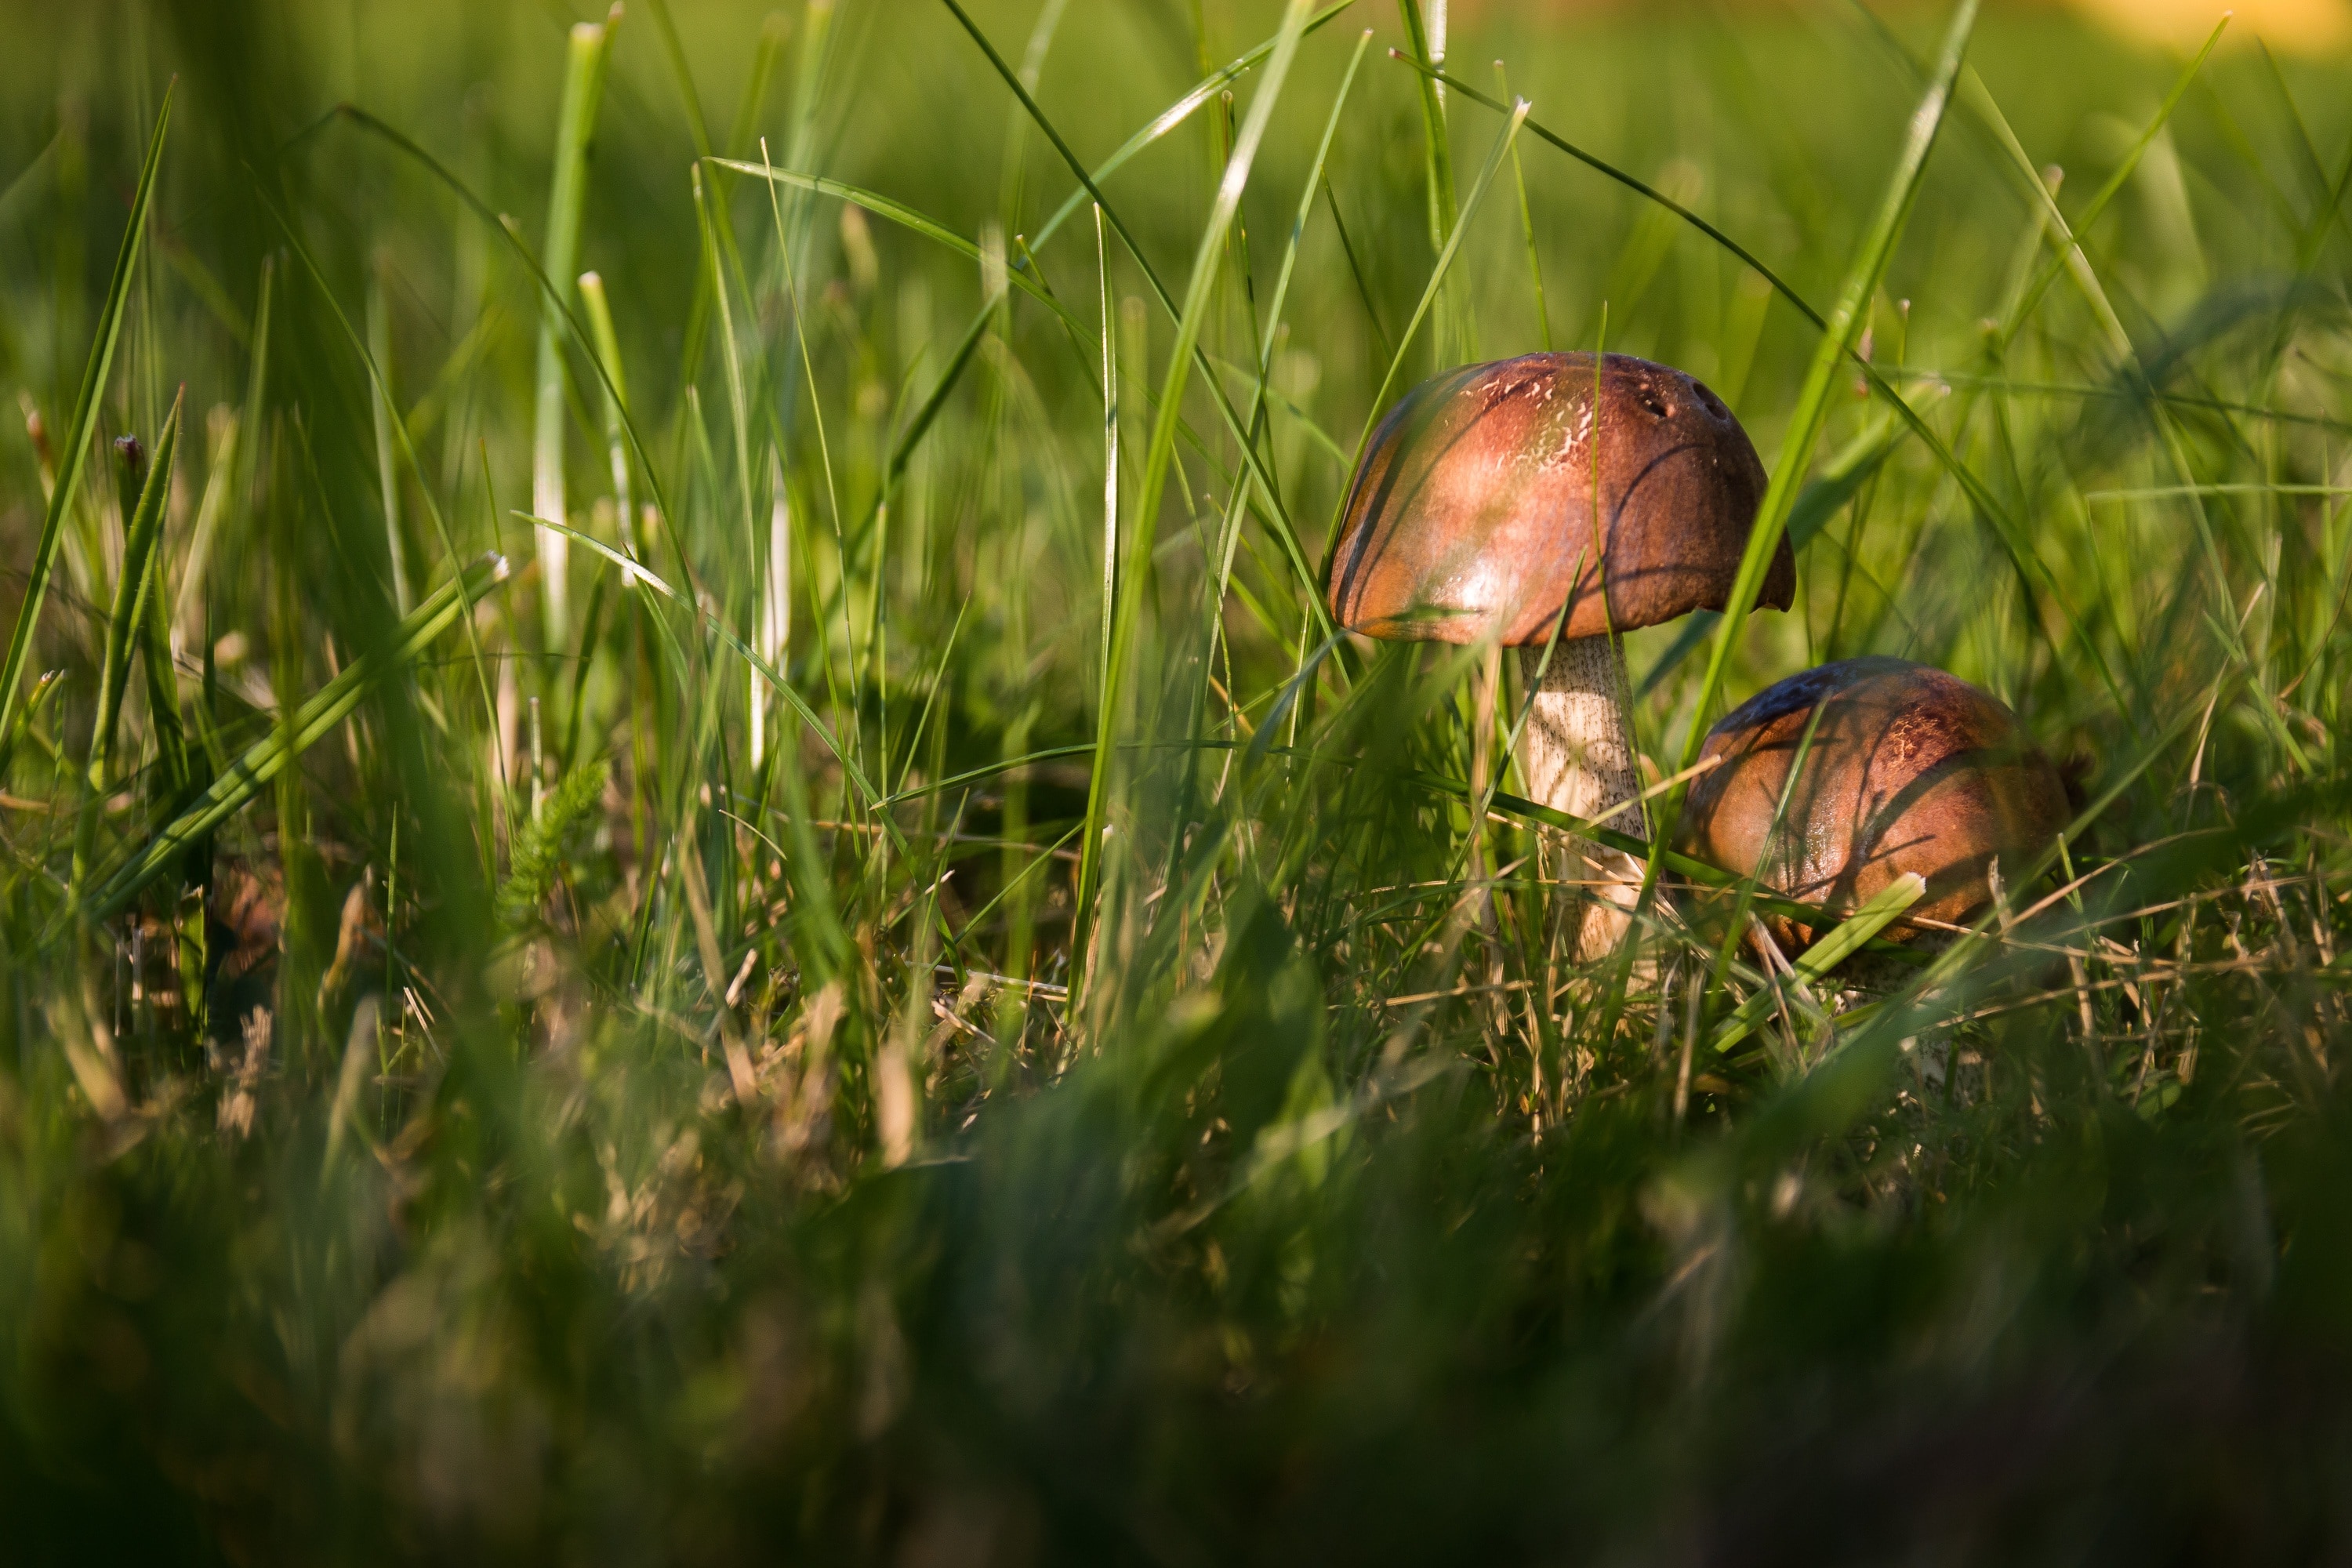 mushroom beside green grass at daytime